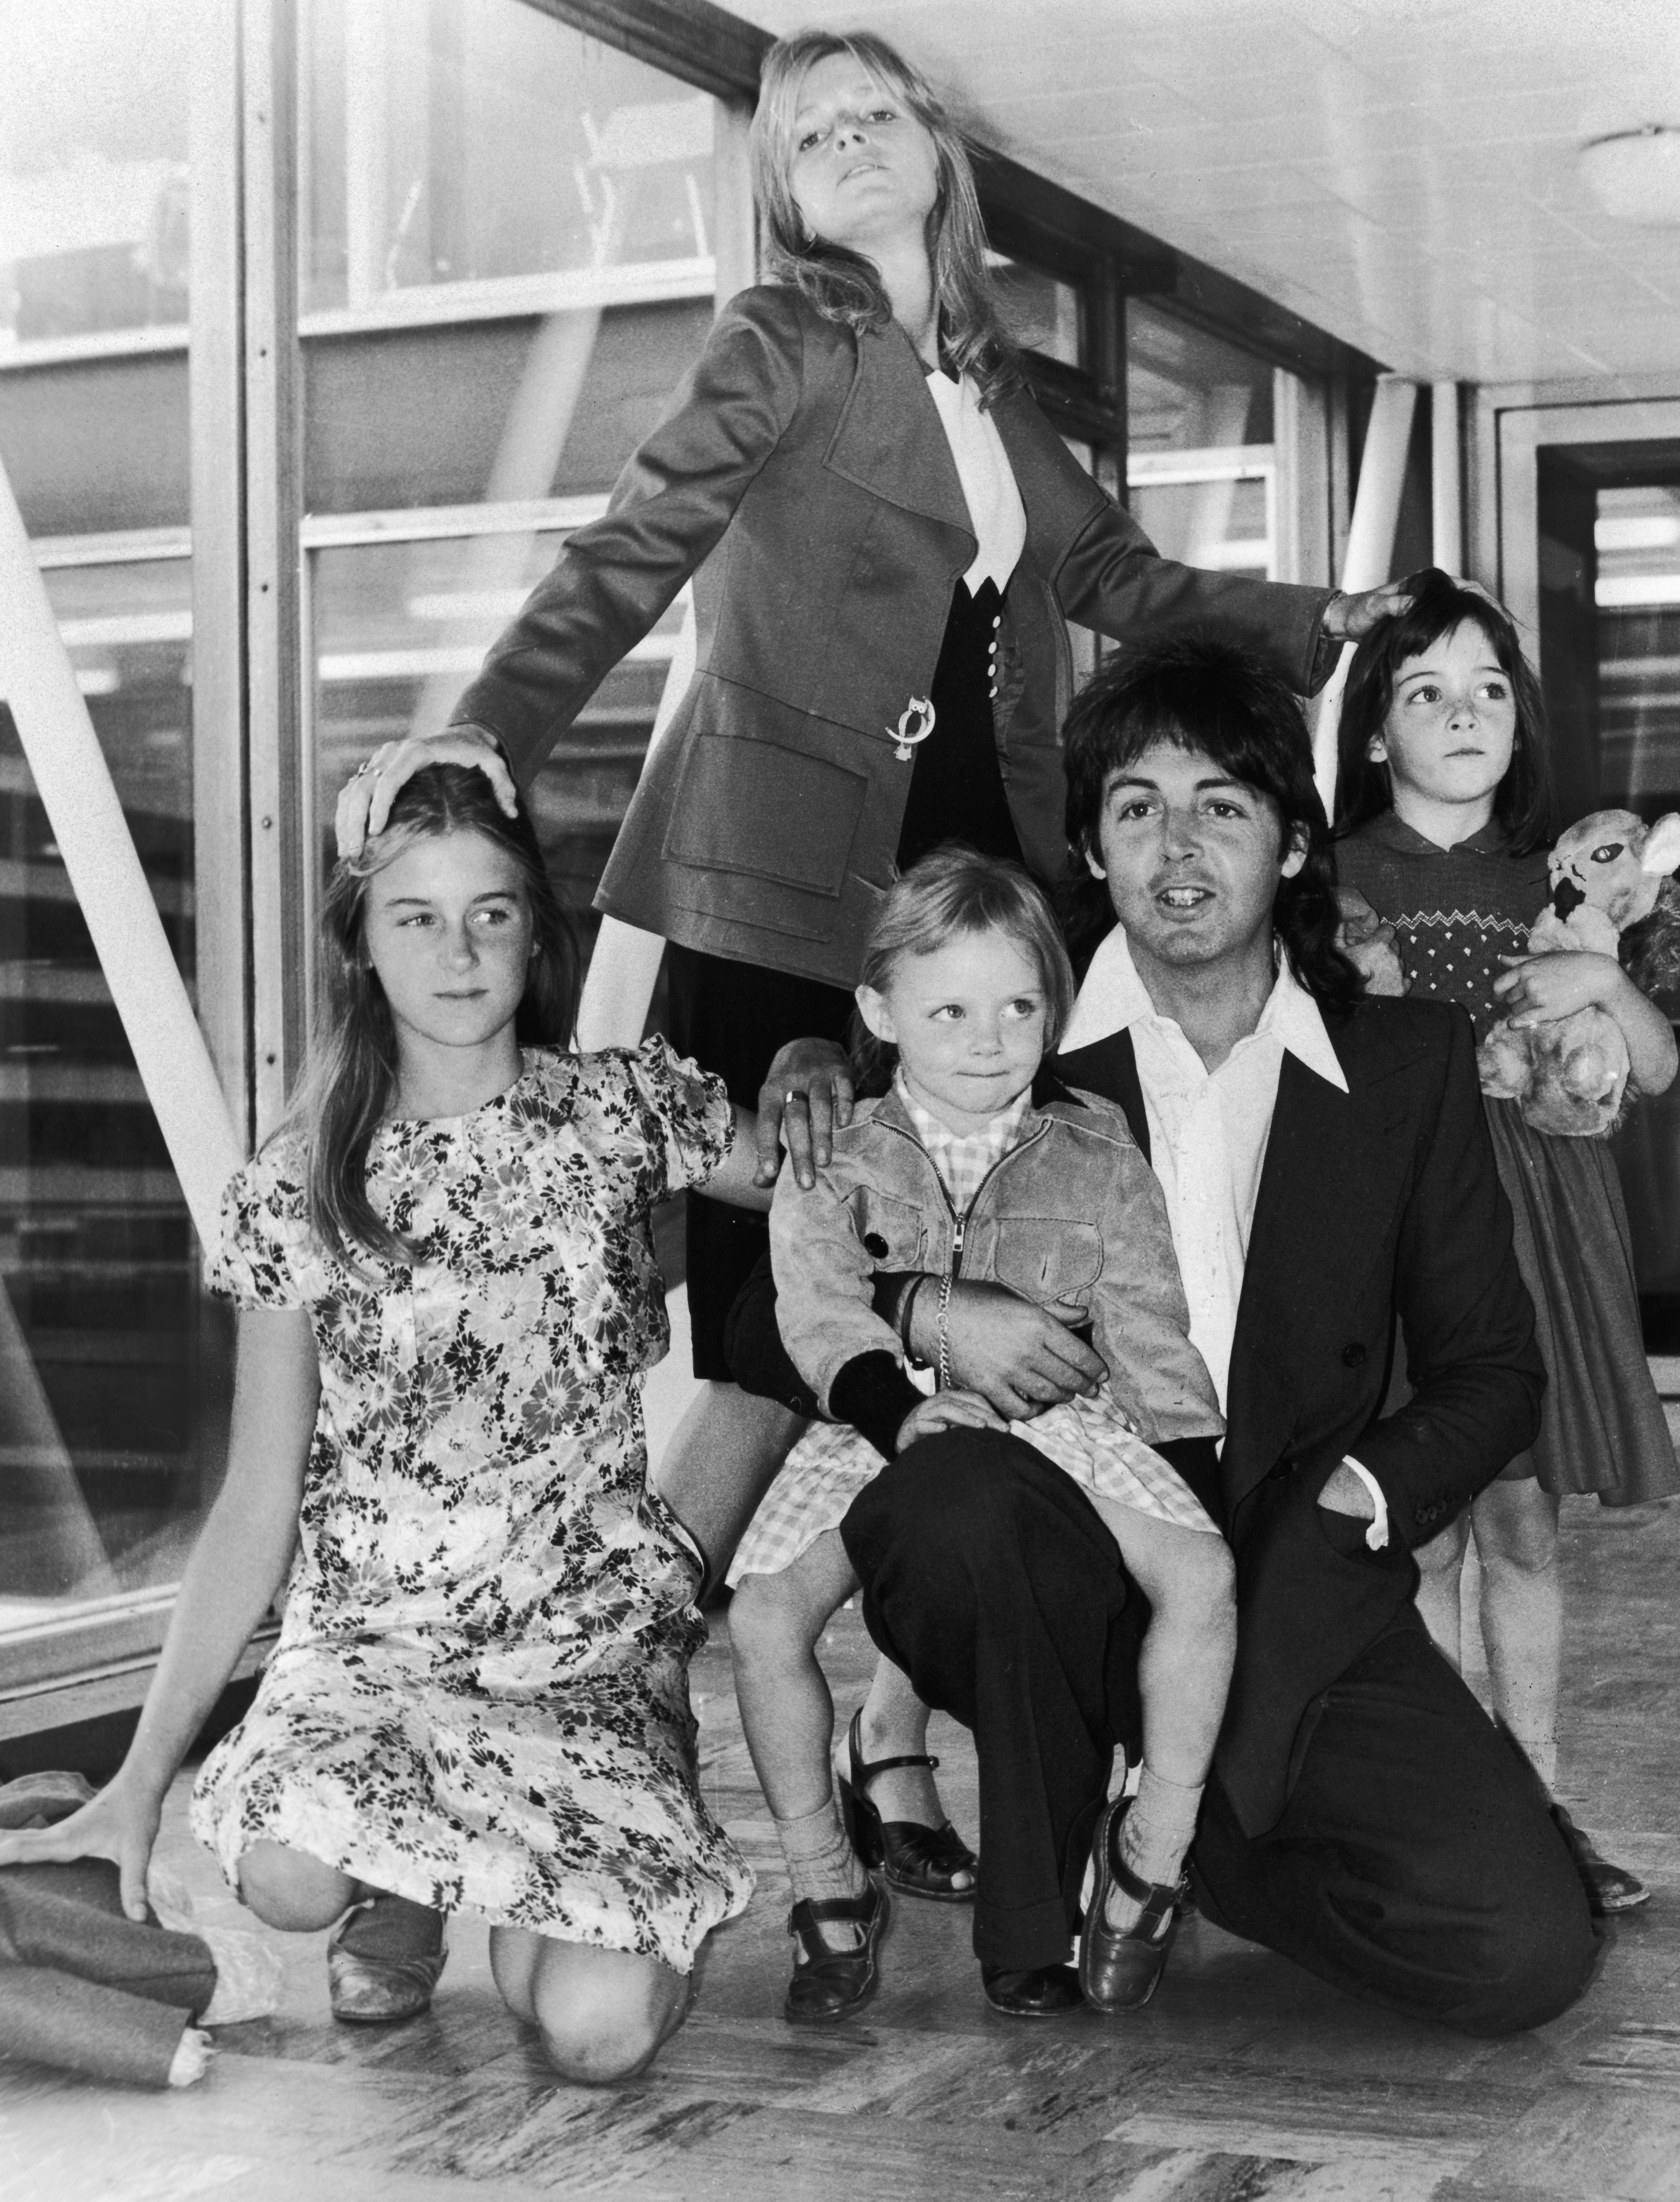 Paul McCartney, Linda McCartney, Heather McCartney, Stella McCartney, and Mary McCartney at an airport, 30th June 1975 | Source: Getty Images